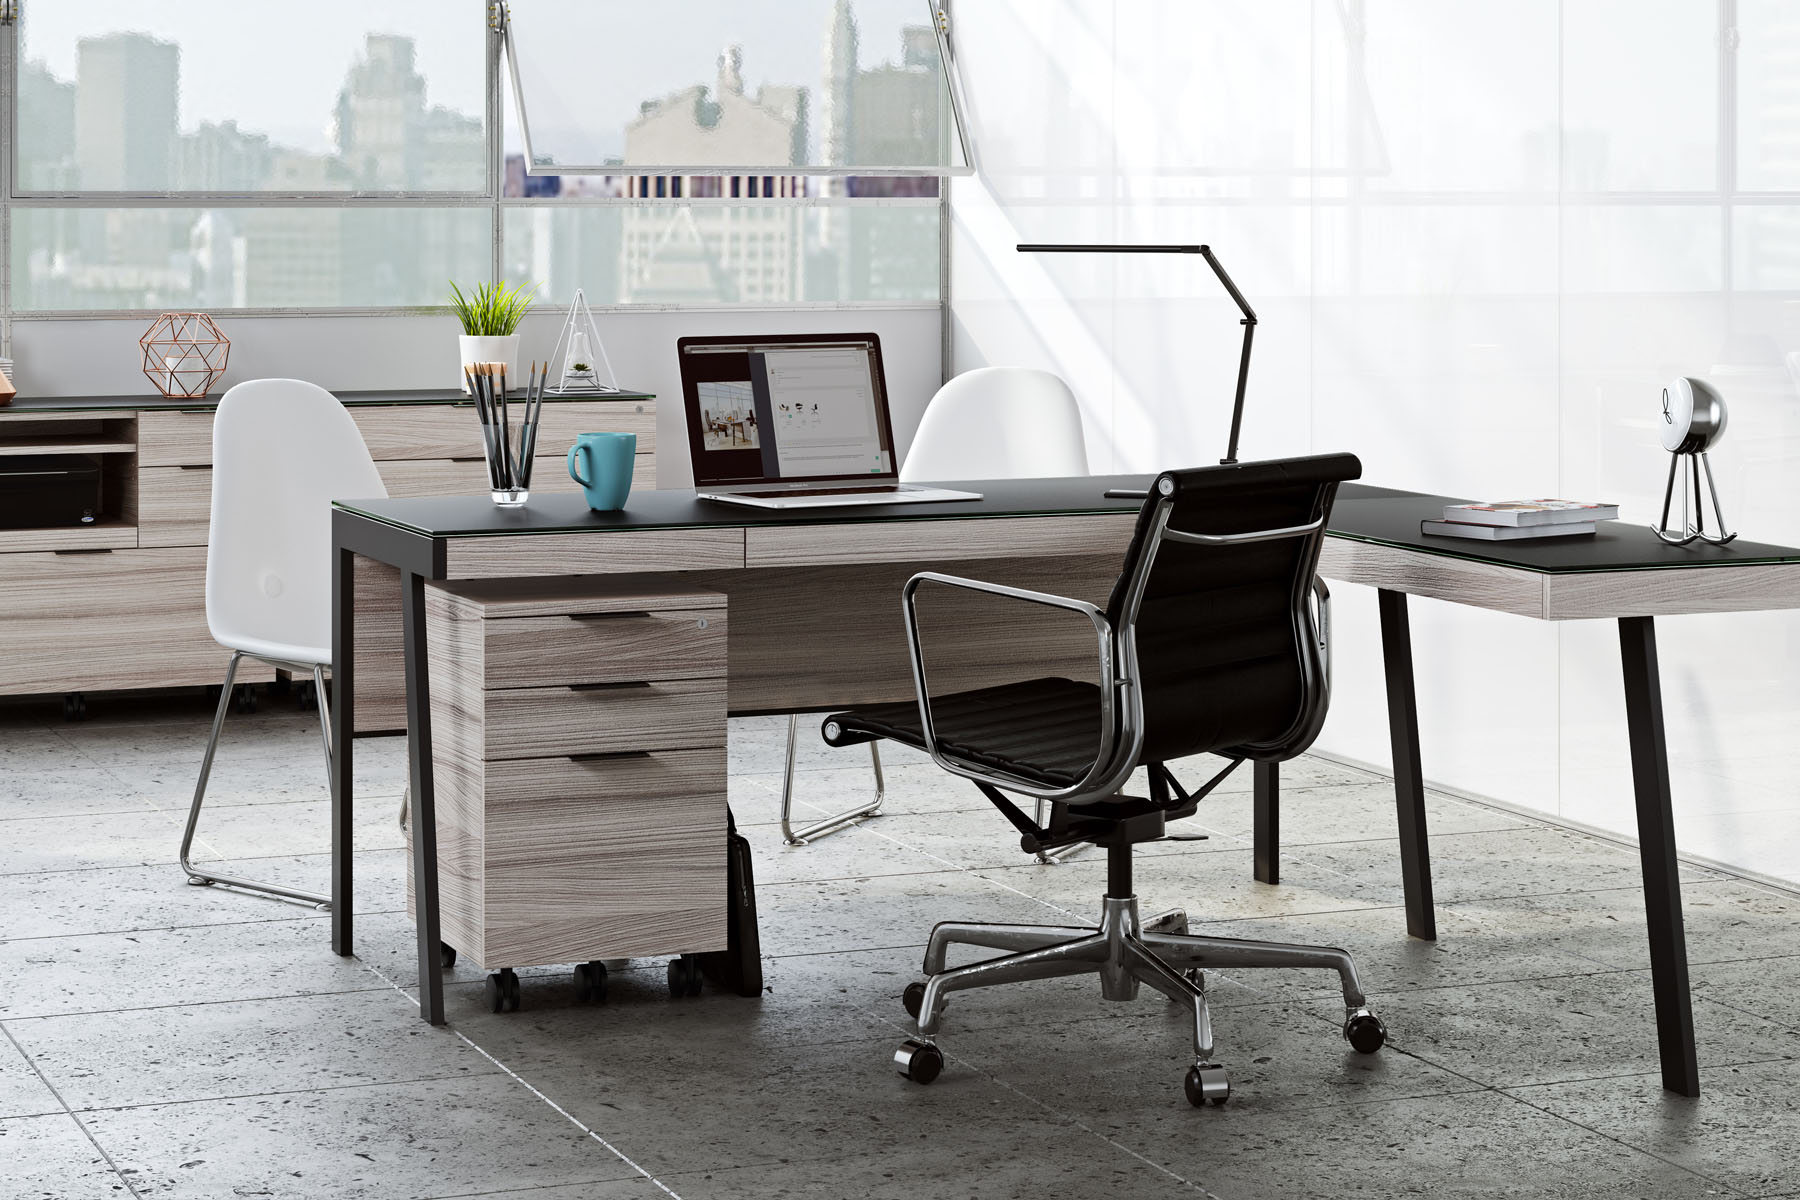 Light Colored Office Furniture | Modern Desk & Contemporary Chair | San Fran Design